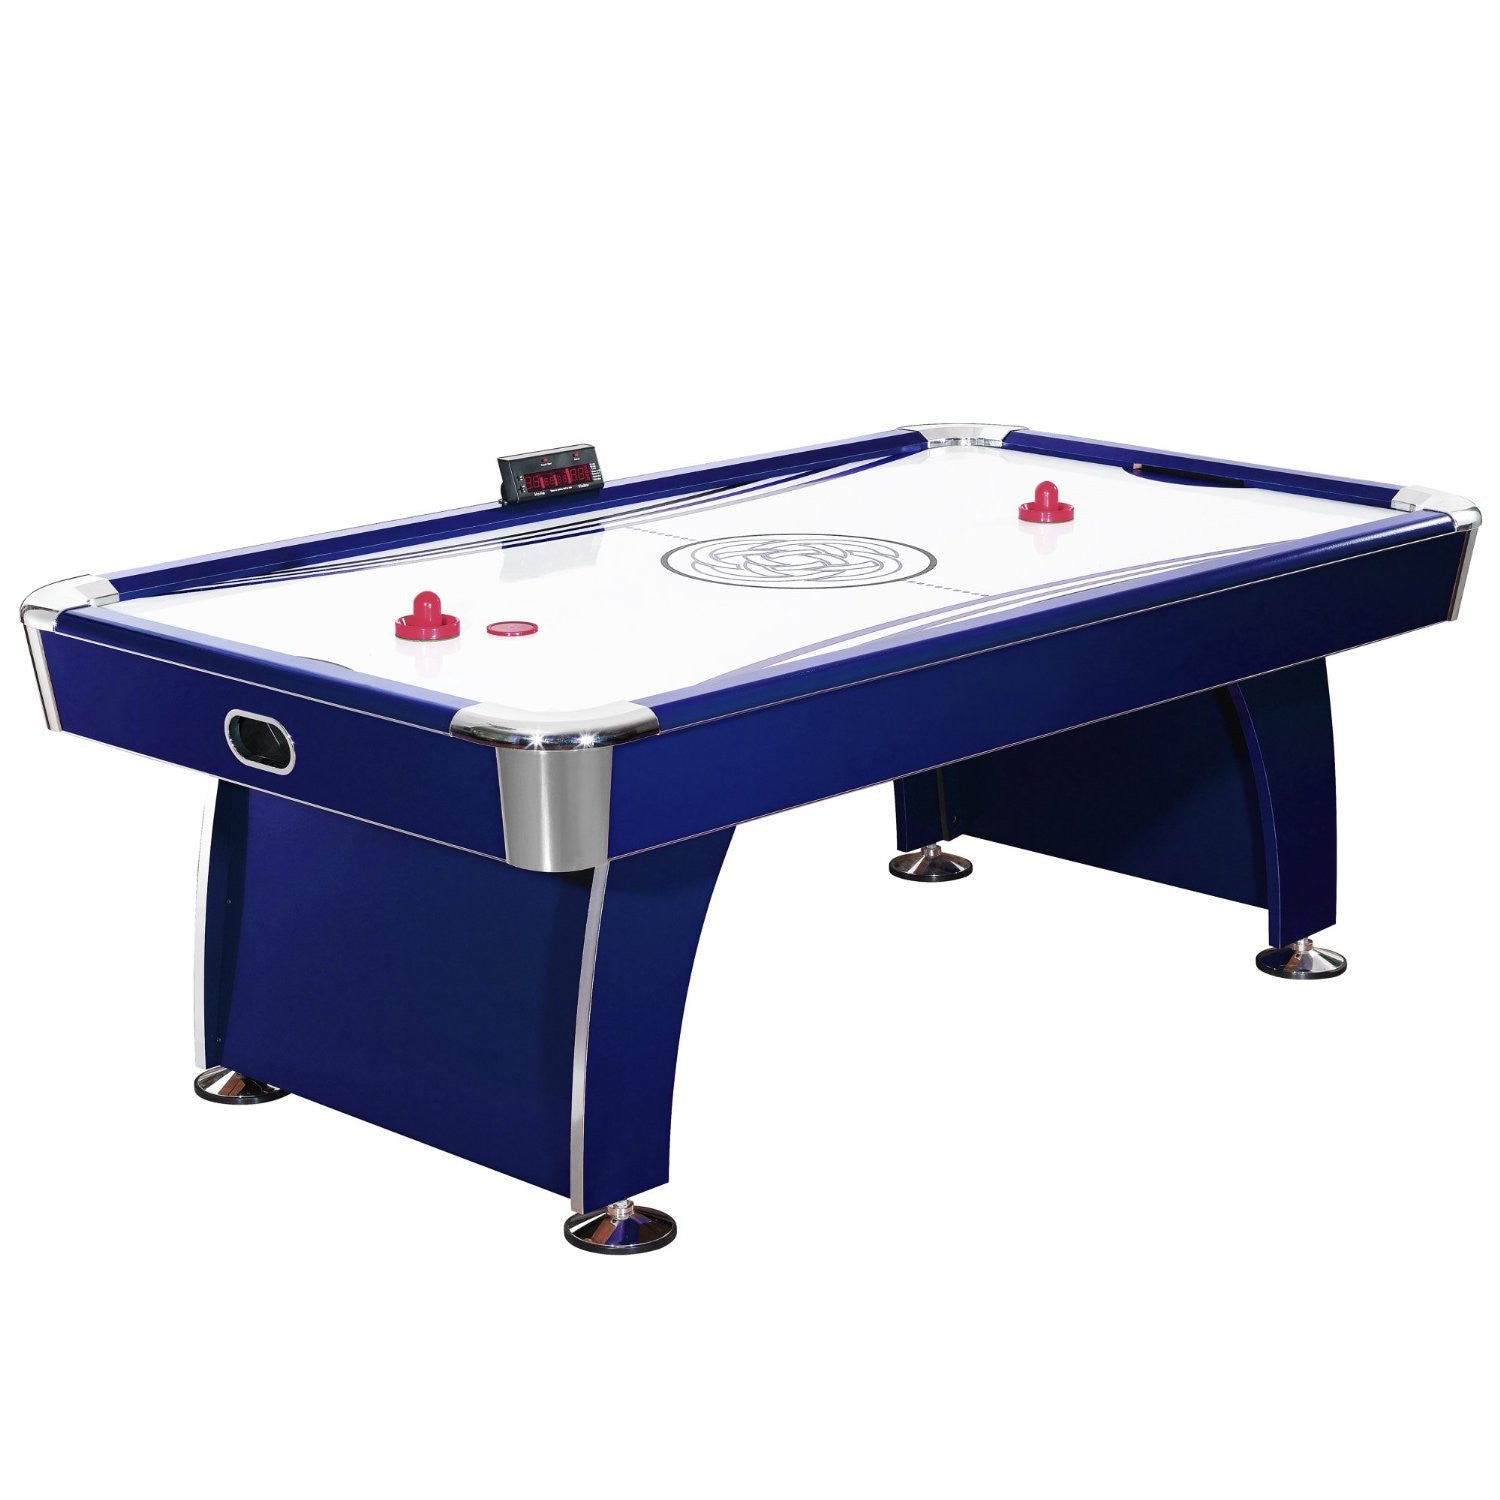 Hathaway 7.5' Phantom Air Hockey Table in Dark Blue/Silver